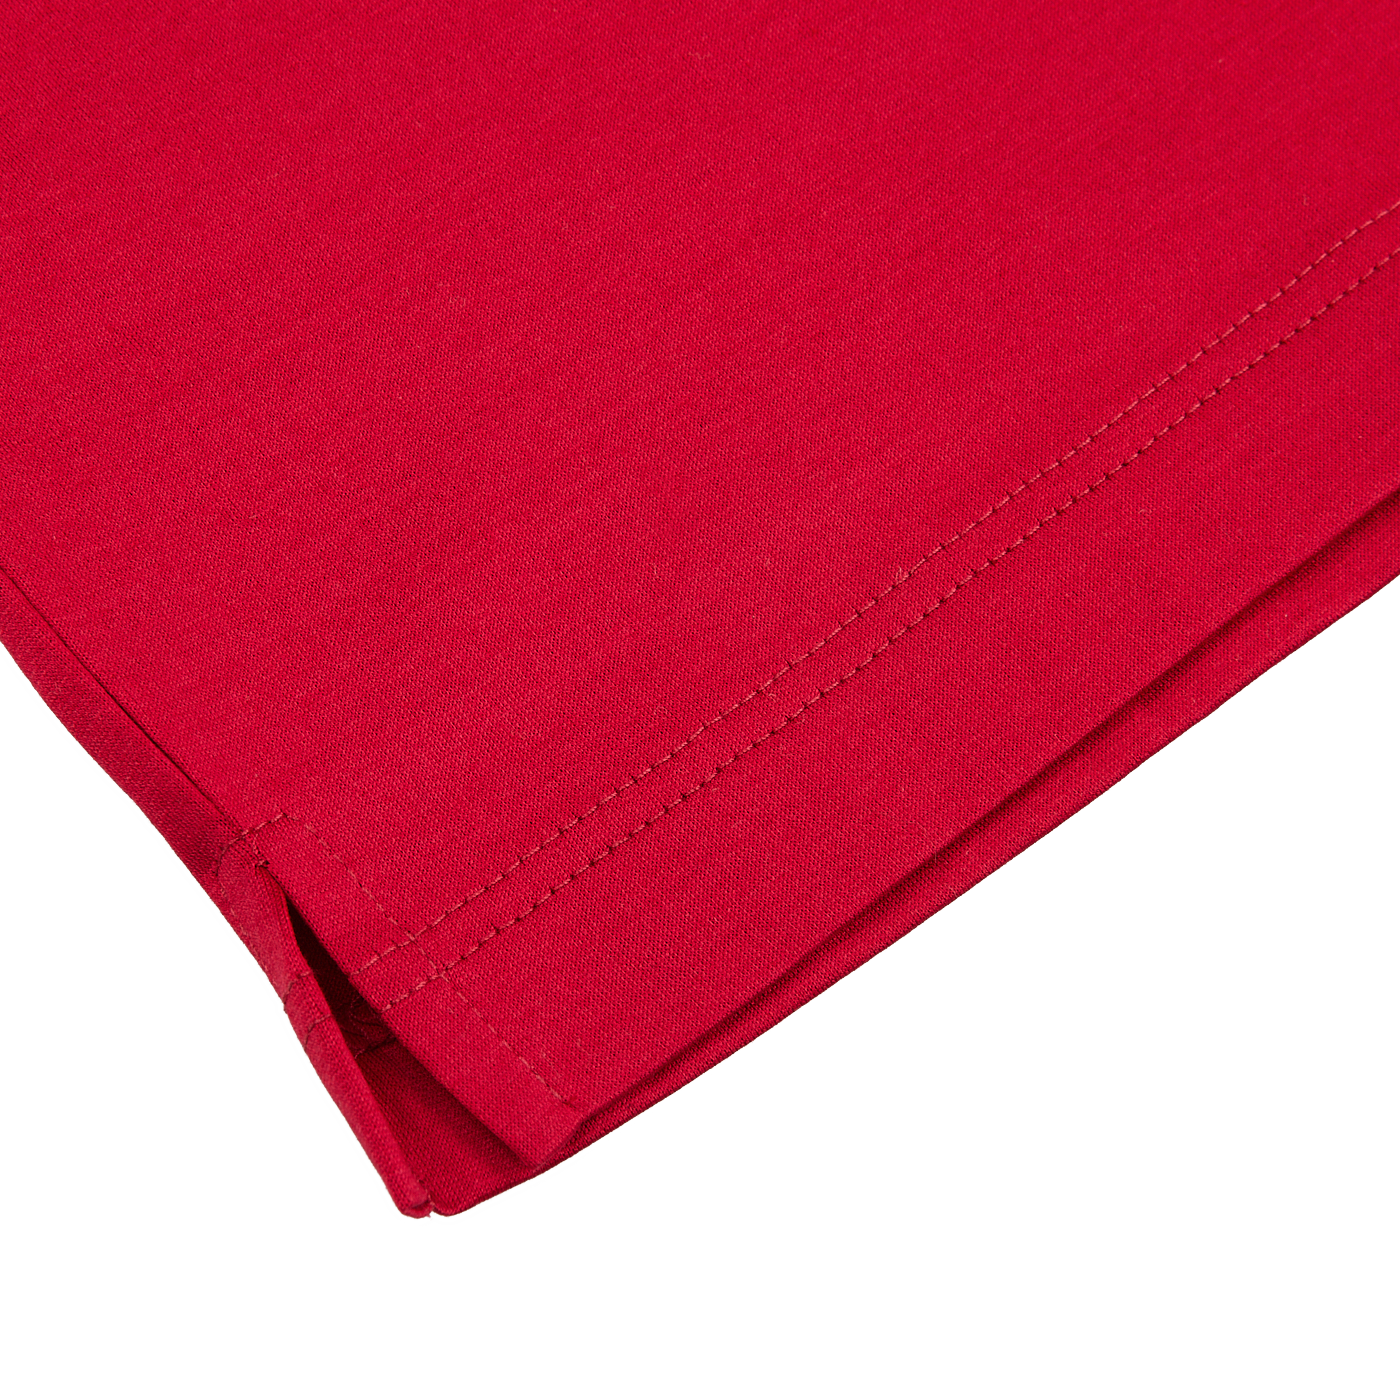 A close up of a Raspberry Red Cotton Filo Scozia Polo Shirt by Gran Sasso.